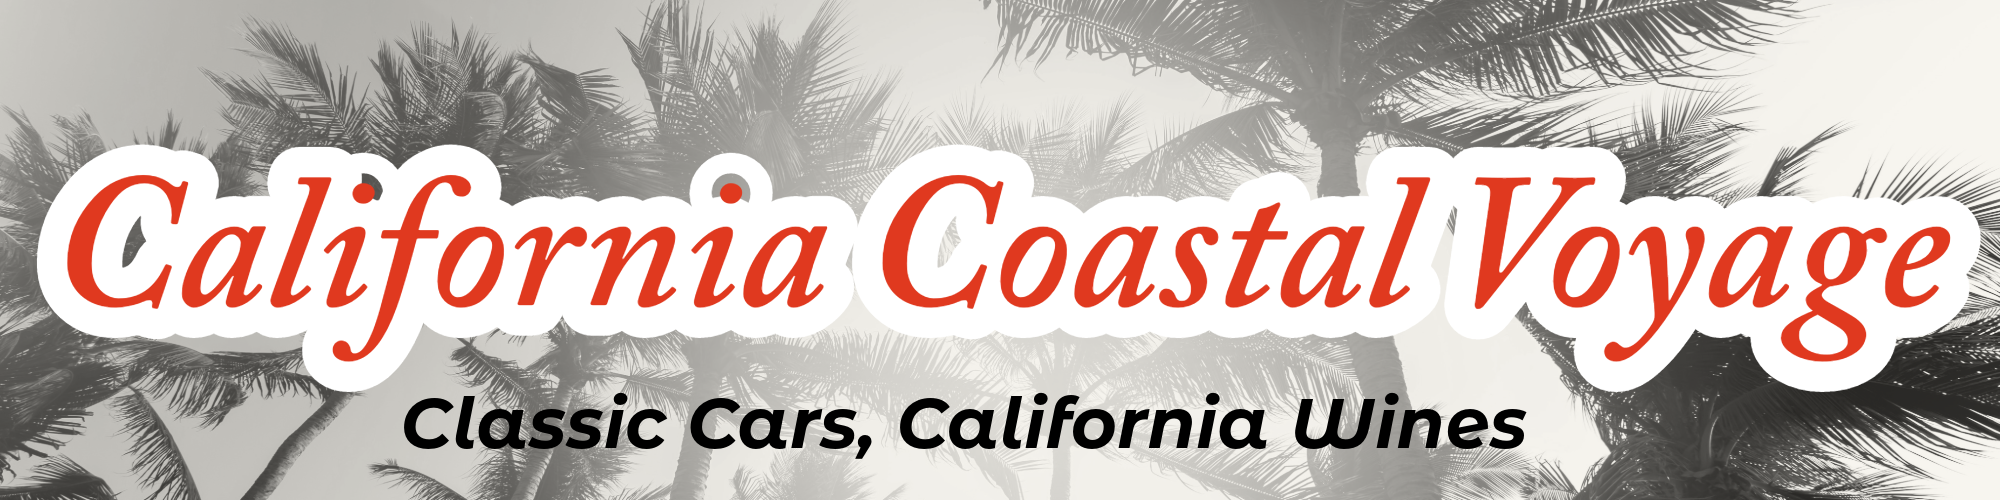 California Castal Voyage Header